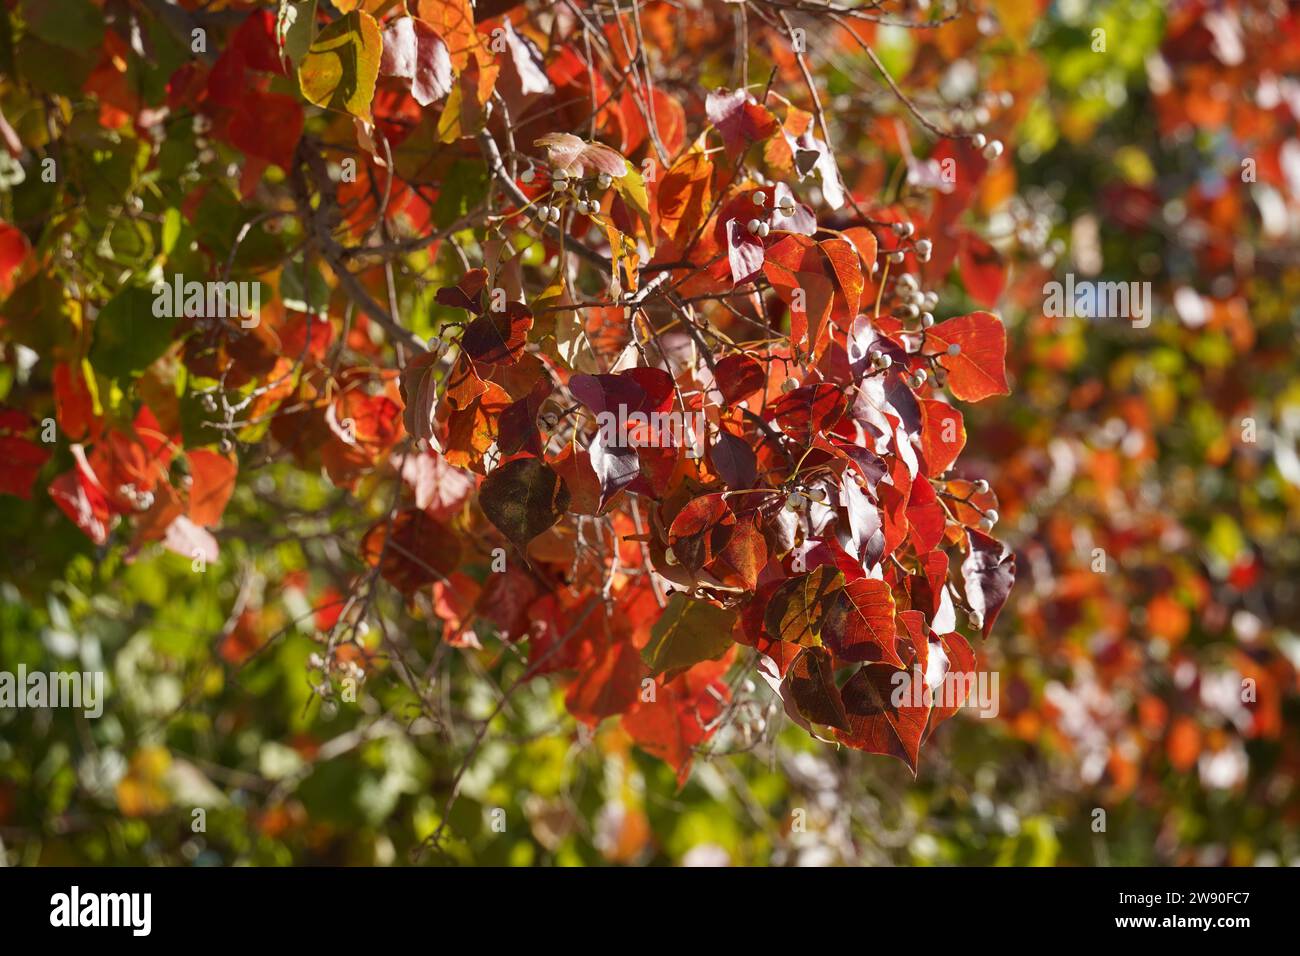 Backlit red leaf of a tallow tree also known as Sapium sebiferum or Triadica sebifera . Israel. Stock Photo